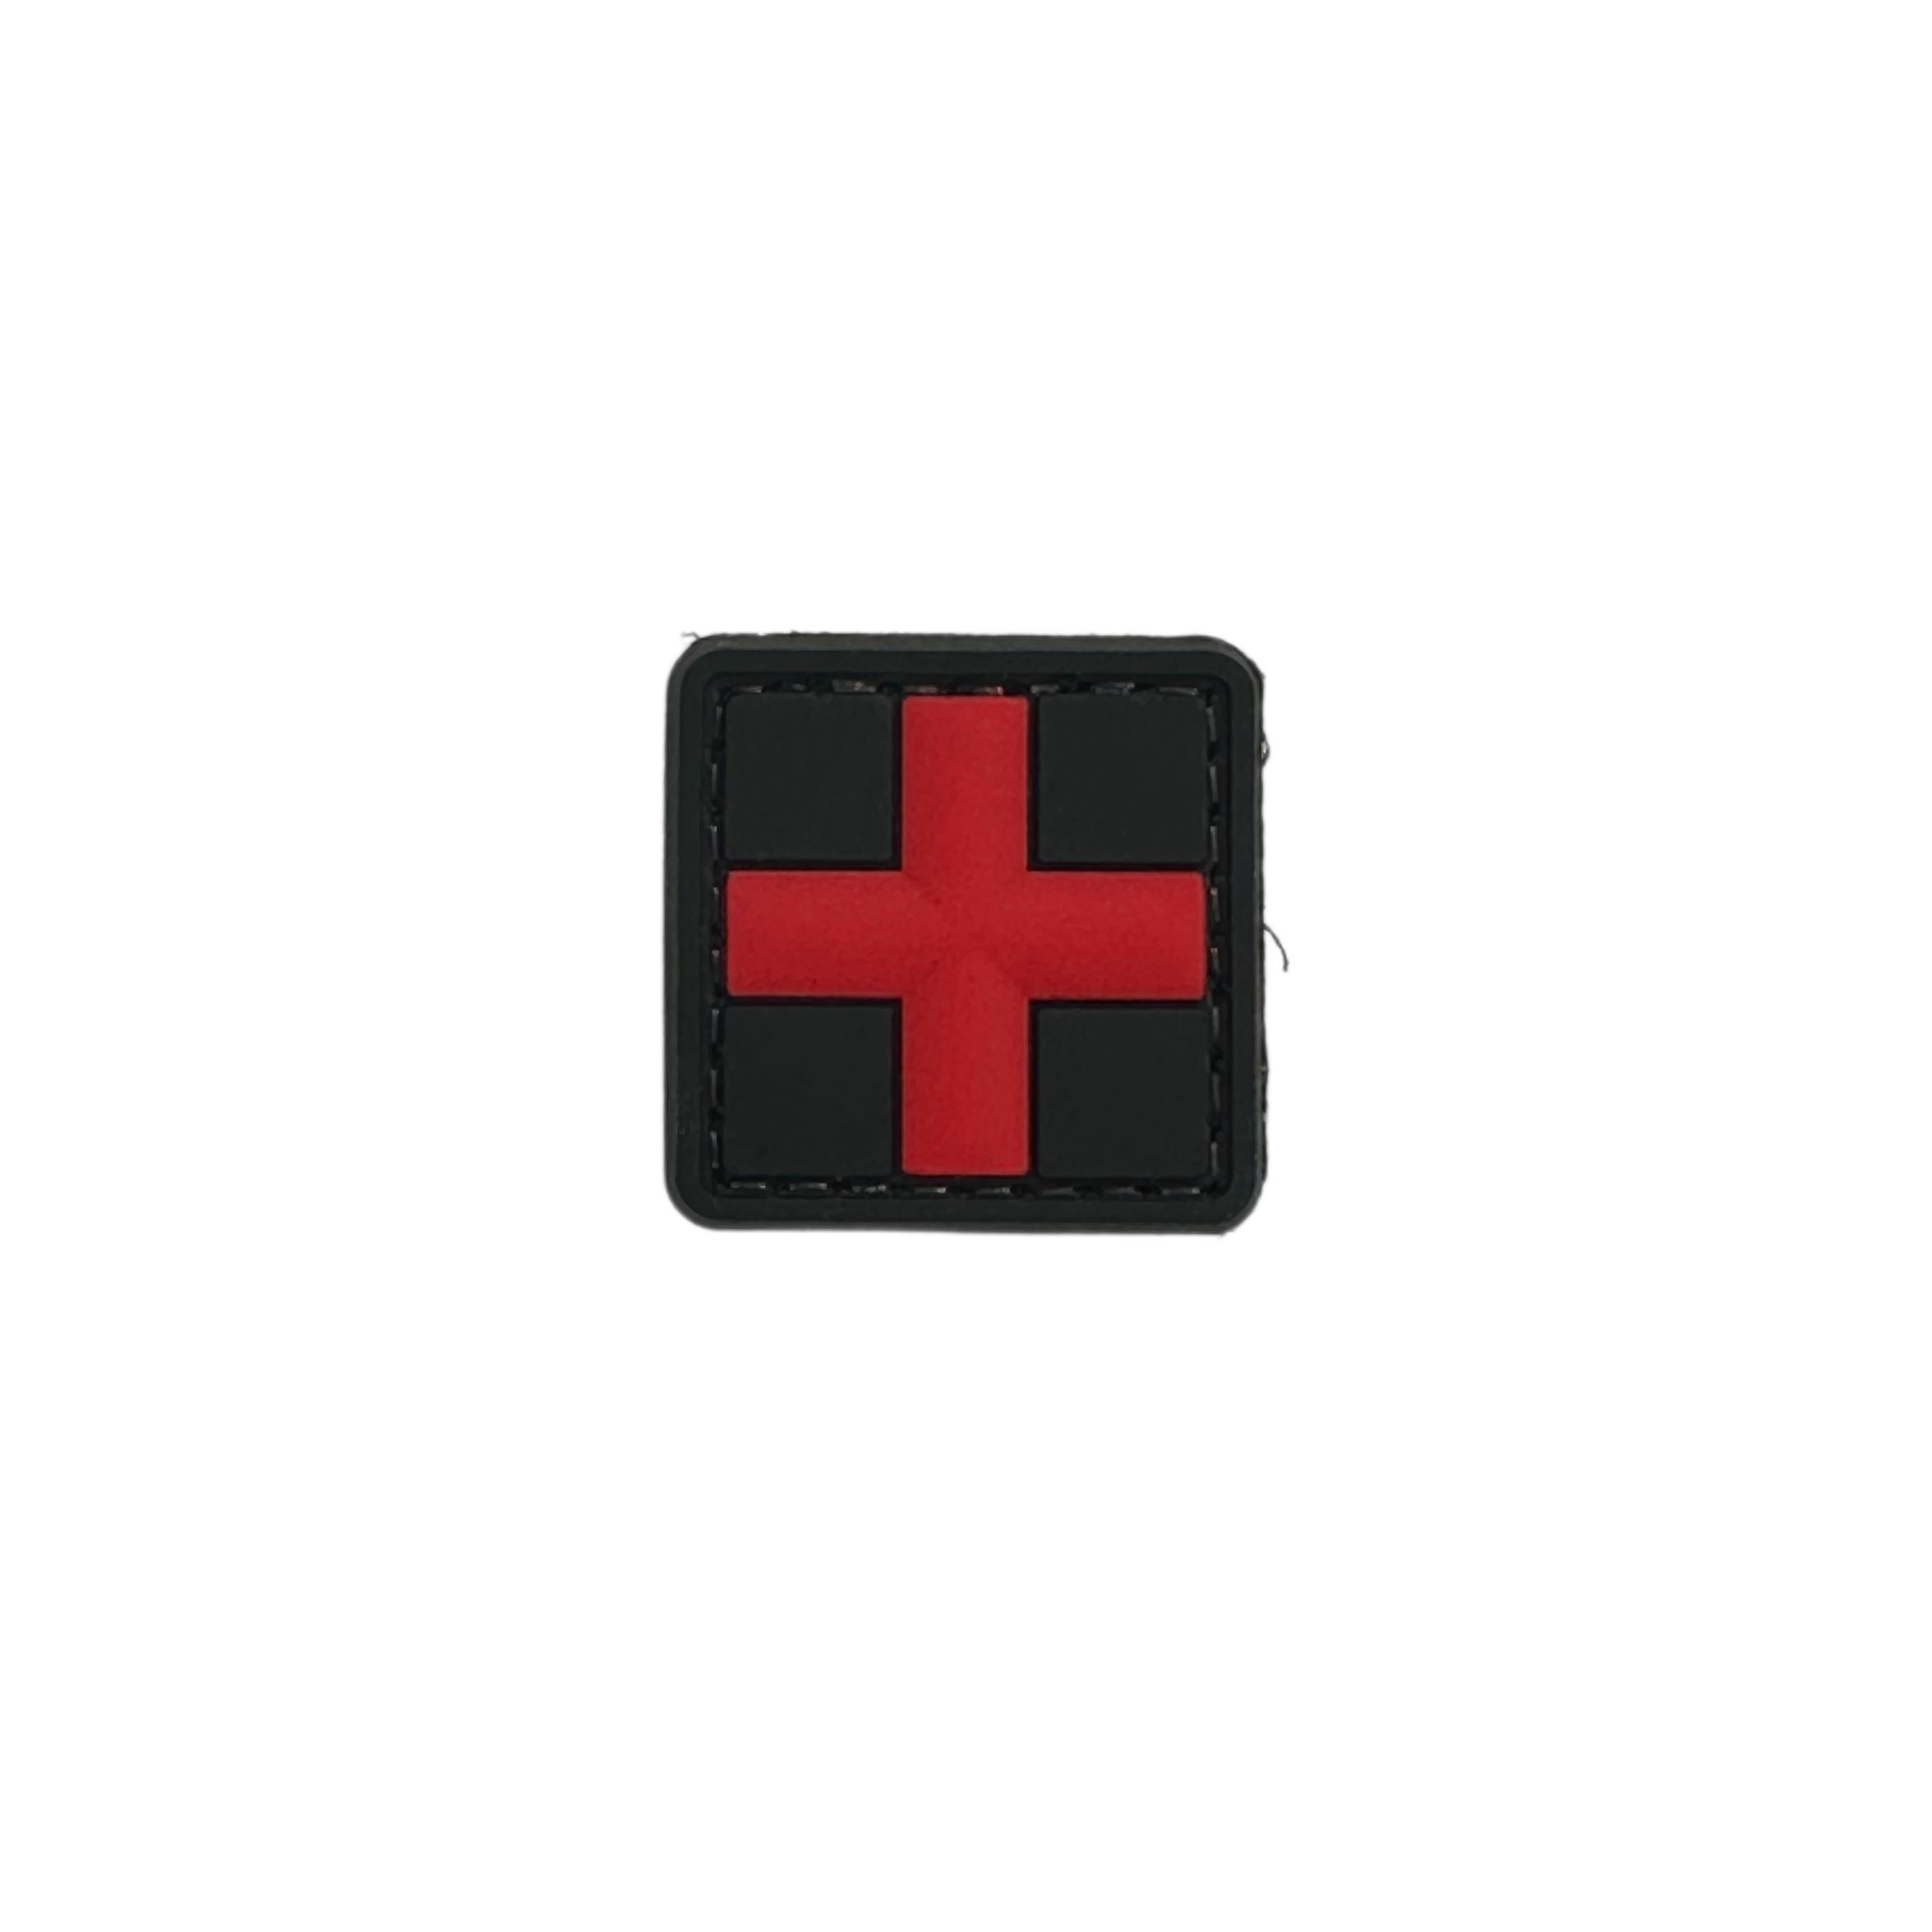 Rubber Patch - Medic Cross